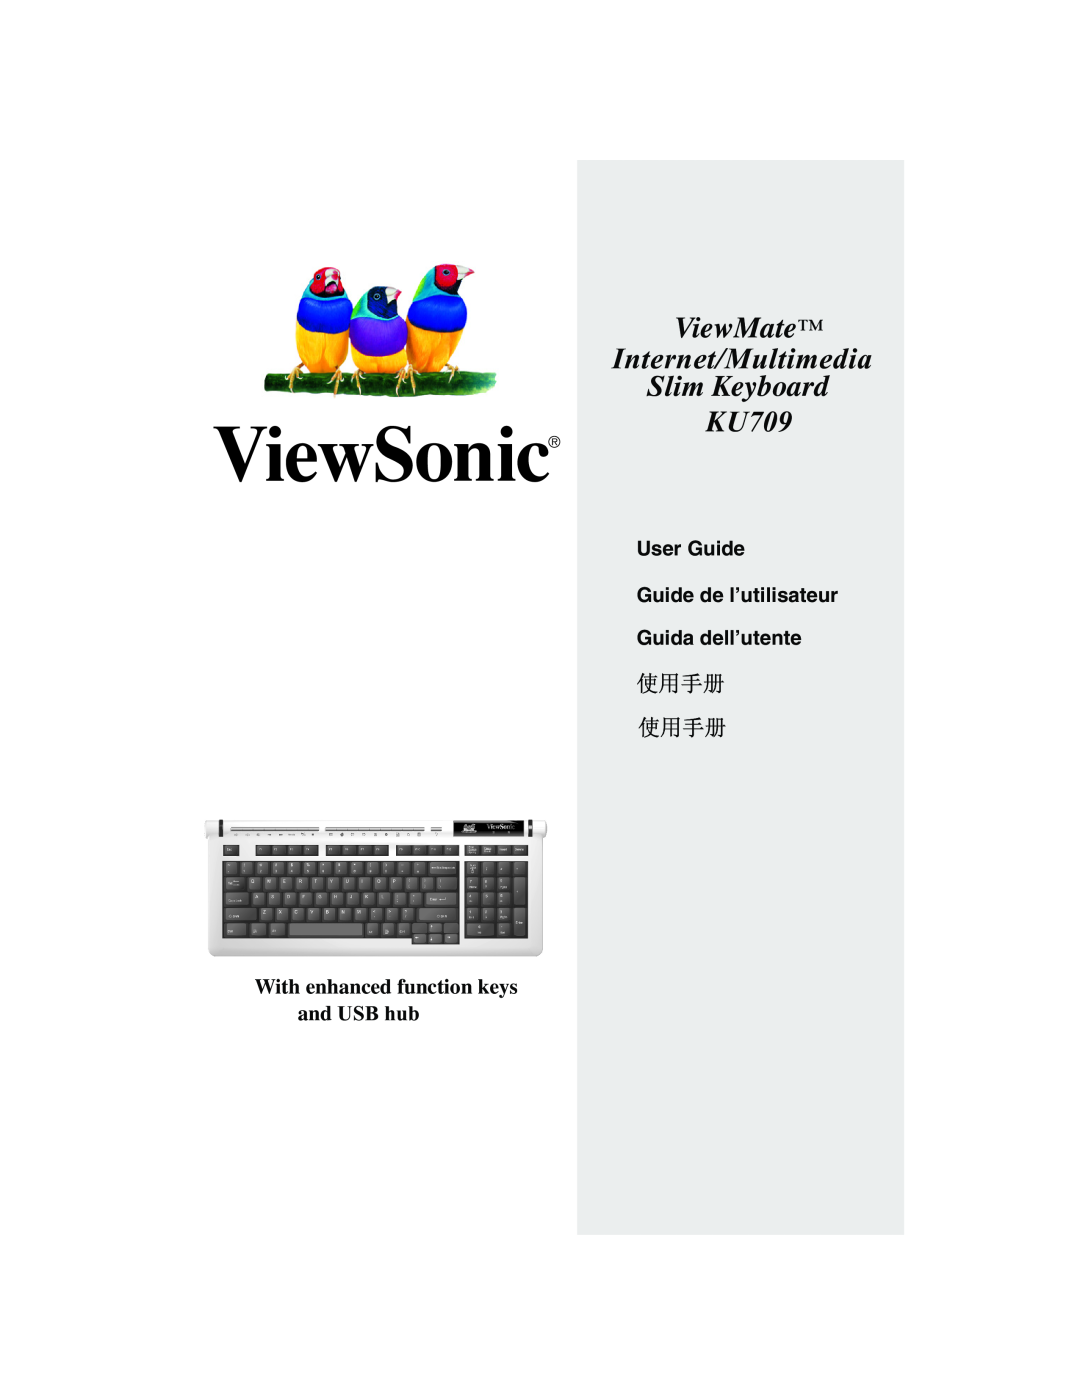 ViewSonic manual With enhanced function keys and USB hub, ViewMate Internet/Multimedia Slim Keyboard KU709, 使用手册 使用手册 